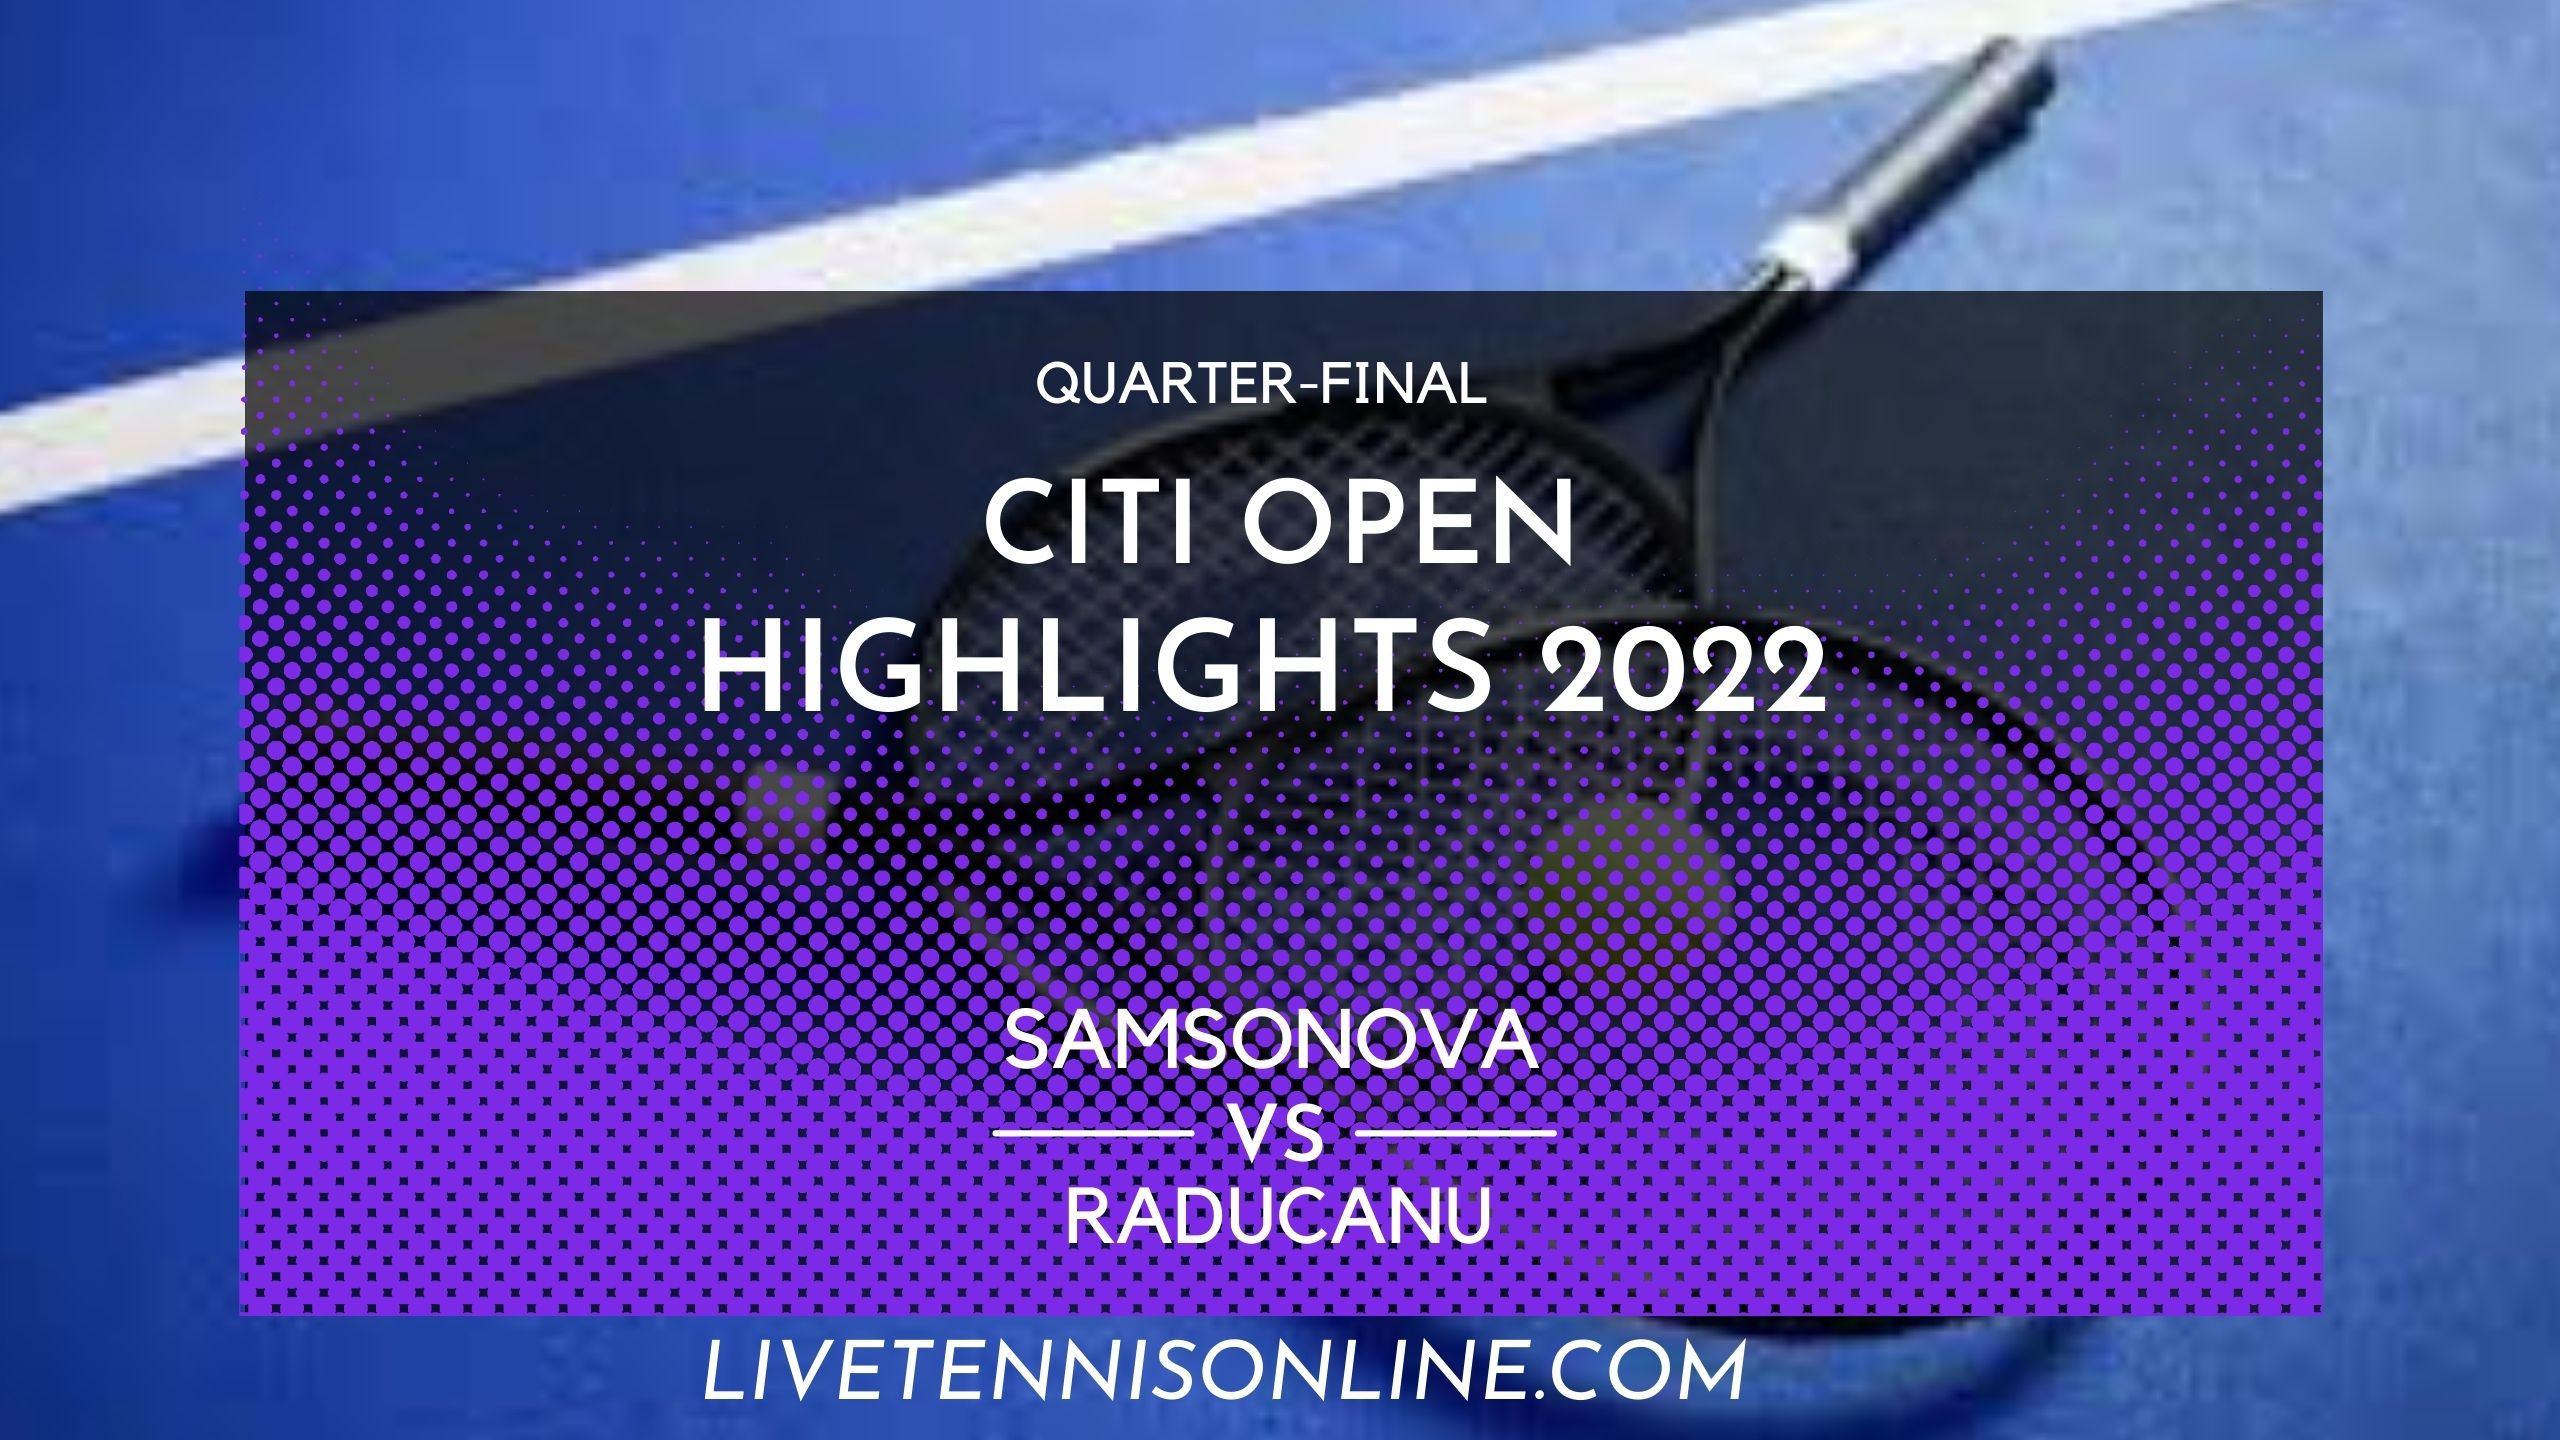 Samsonova Vs Raducanu QF Highlights 2022 Citi Open